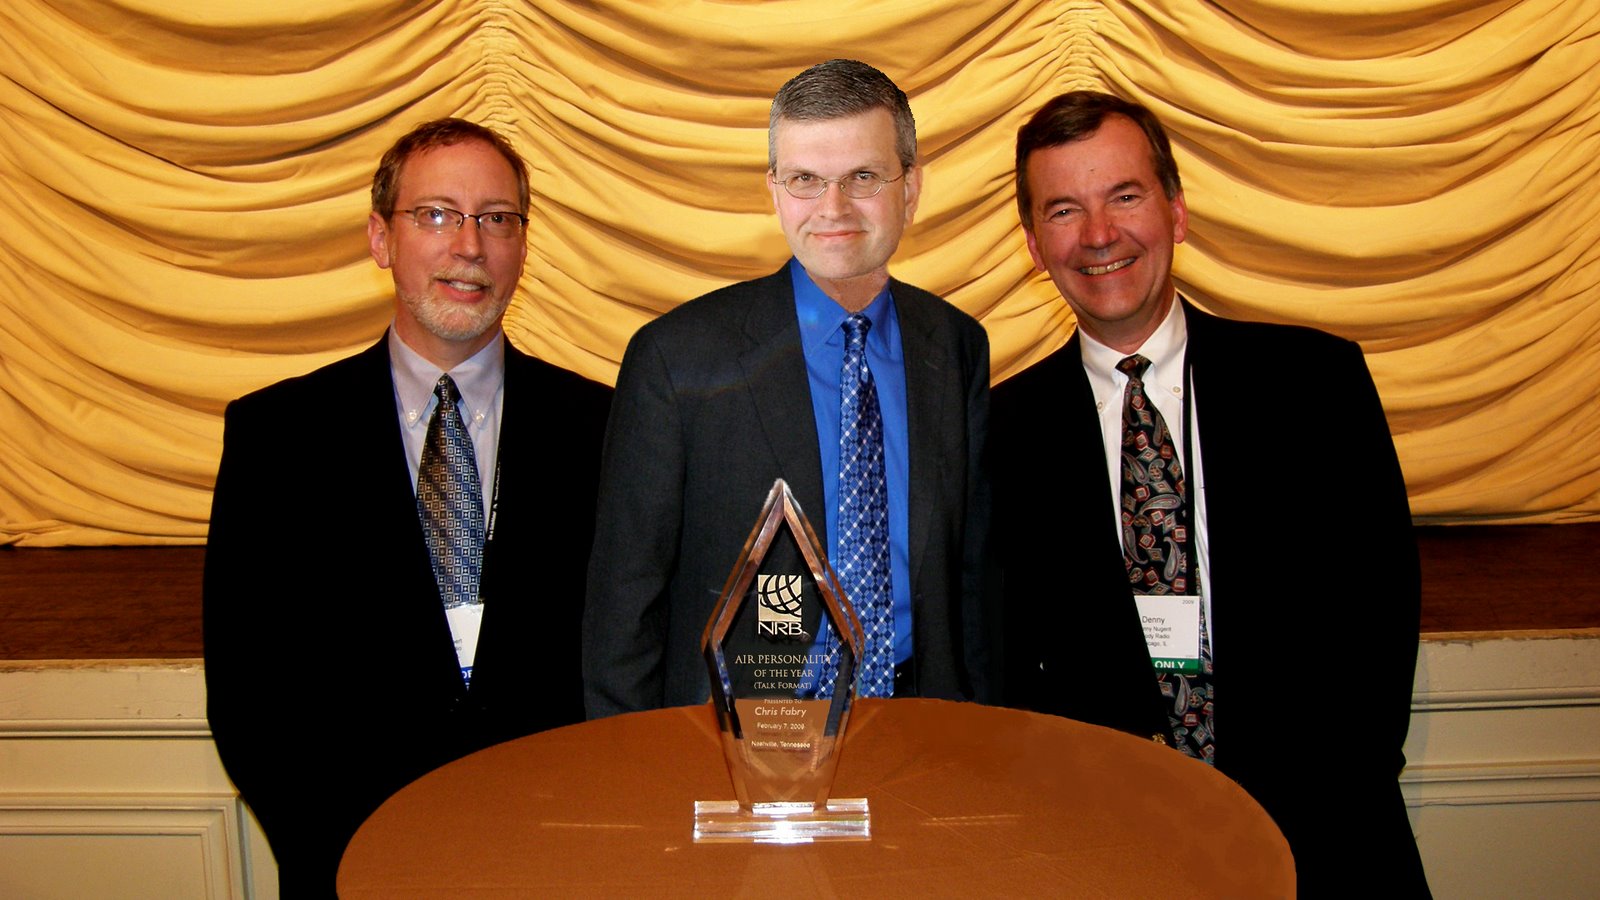 [Chris+Fabry+NRB+2009+Award.jpg]